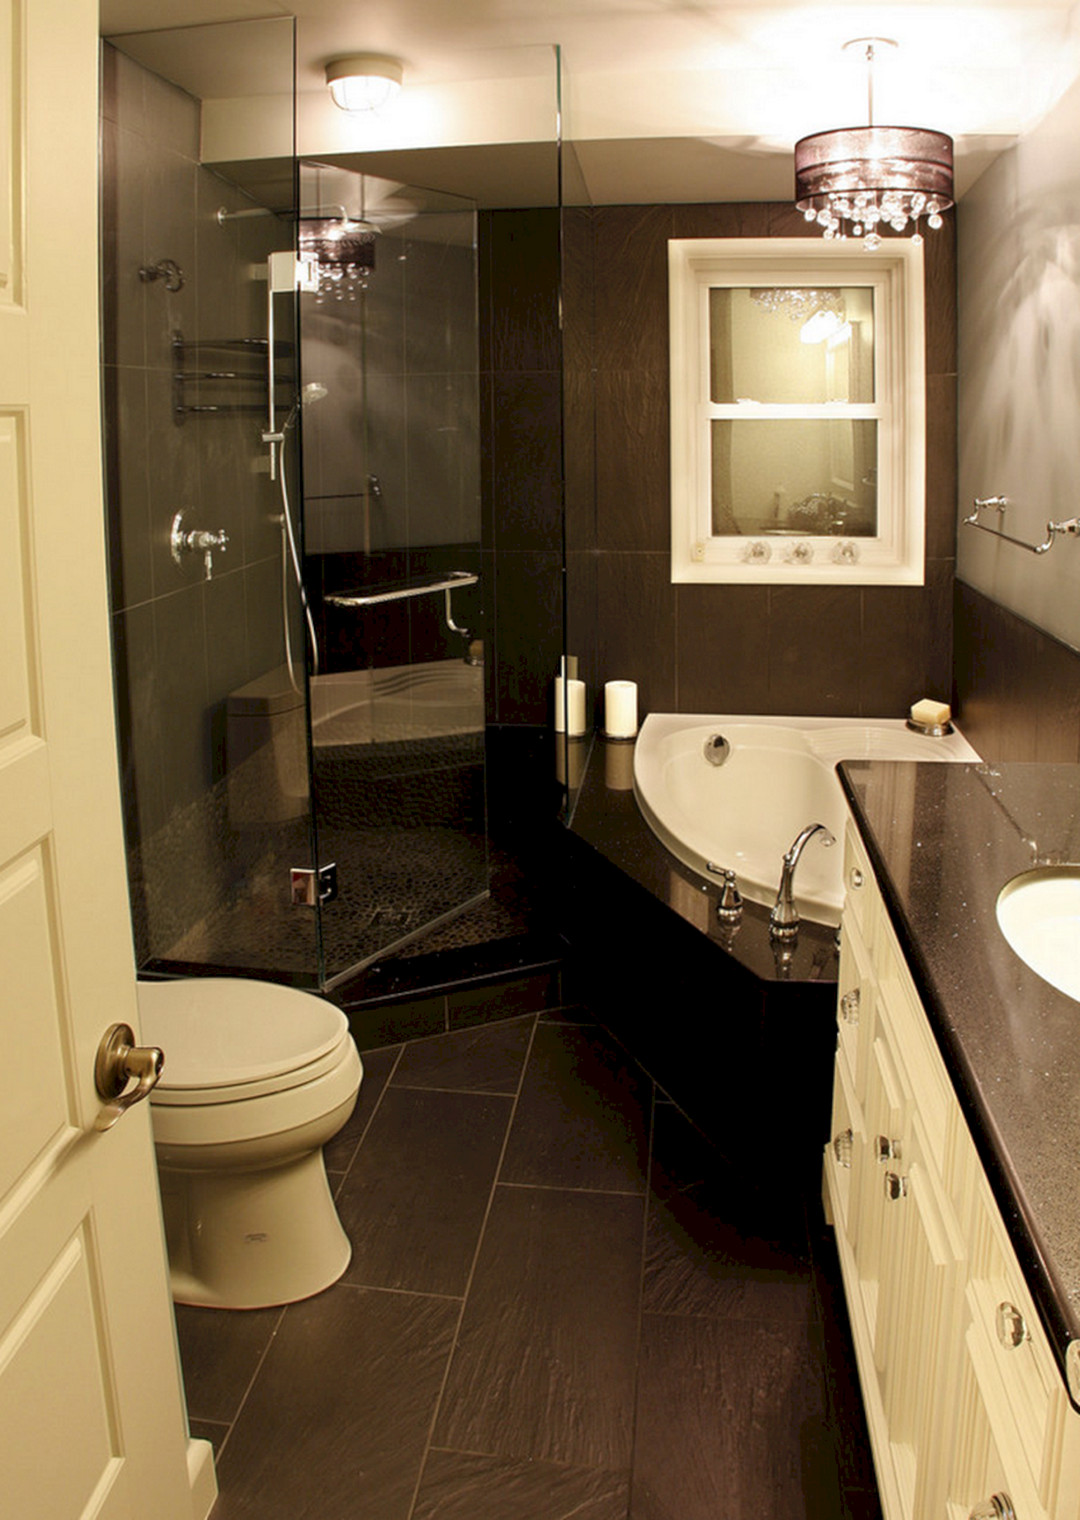 Small Master Bathroom Layout
 Small Master Bathroom Design Ideas Small Master Bathroom